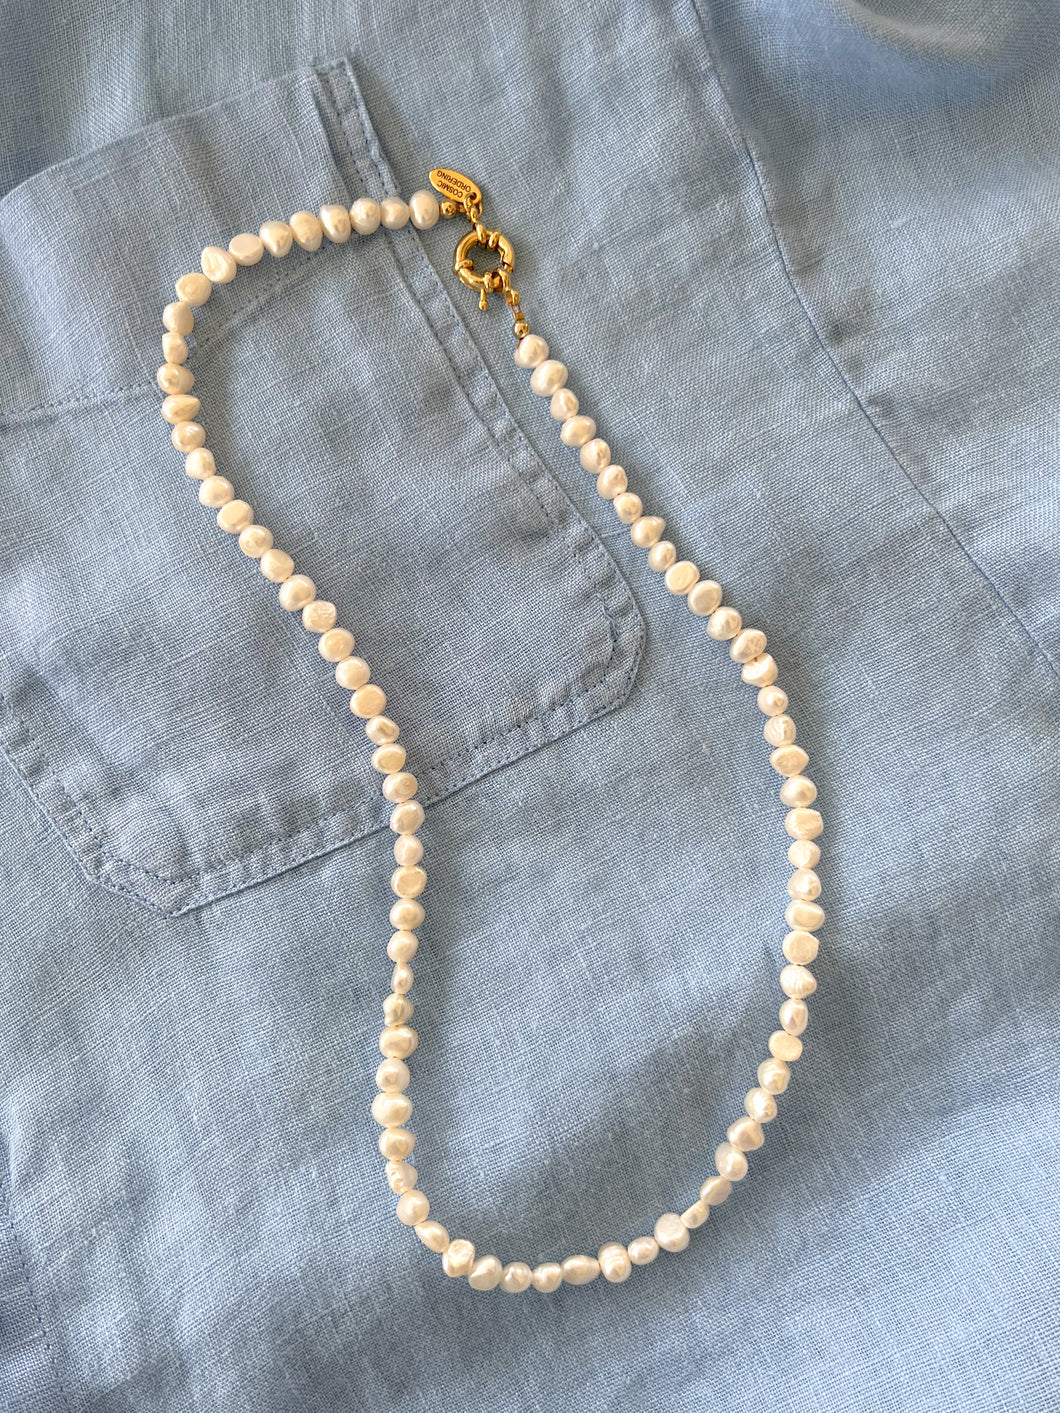 Men’s pearl necklace